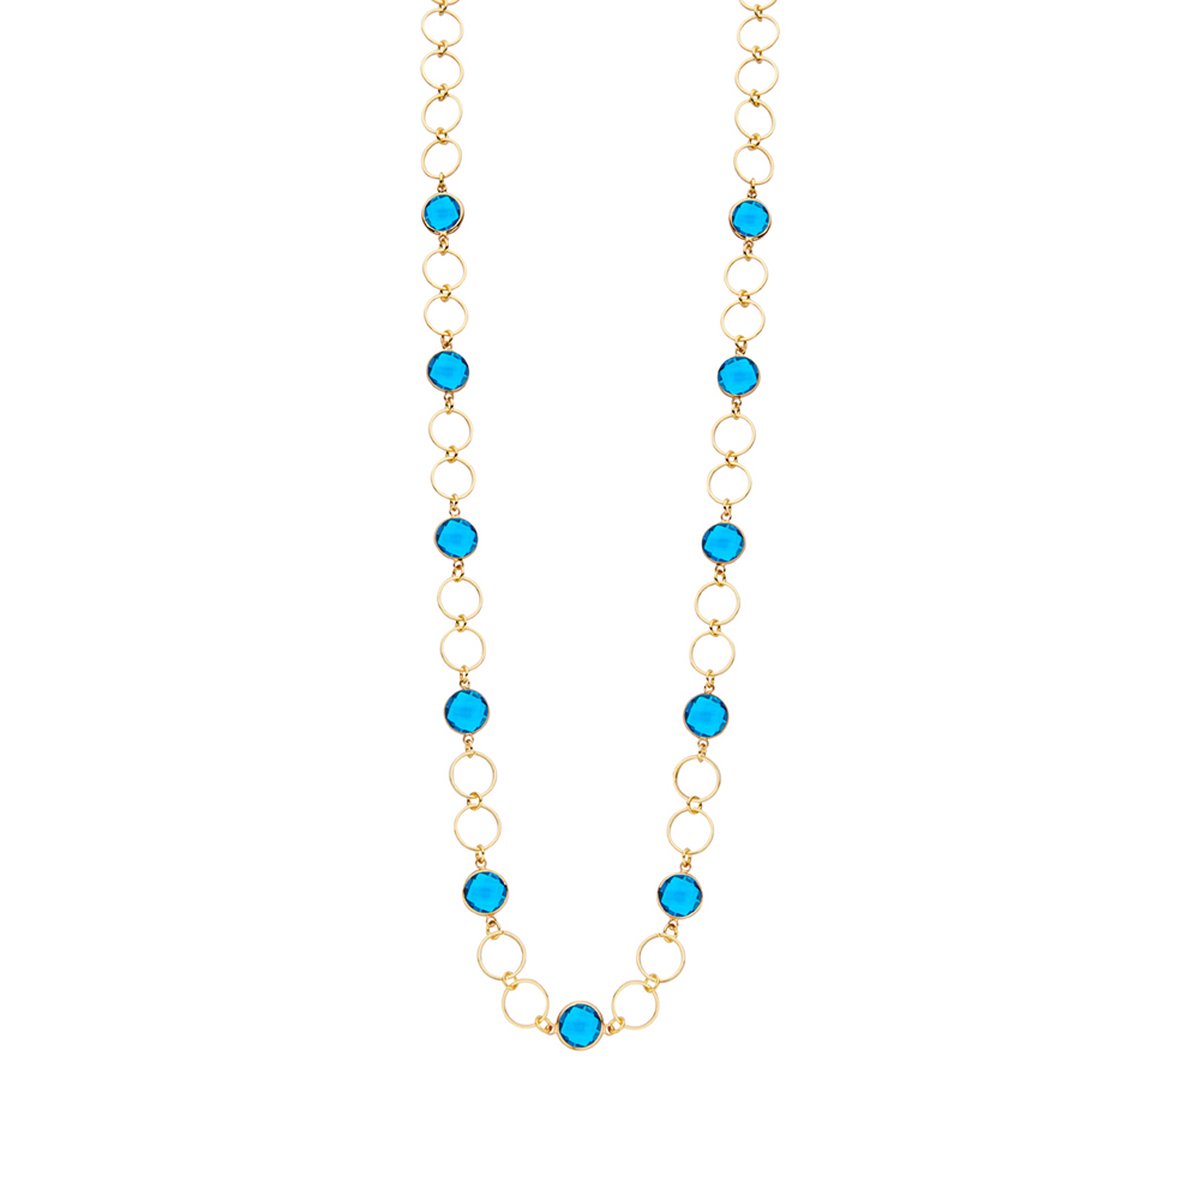 Les Cordes - Halsketting - Collier - DANISLANG - Kleur Blauw - Metaal - Sieraad Dames - Juwelen - Statement ketting